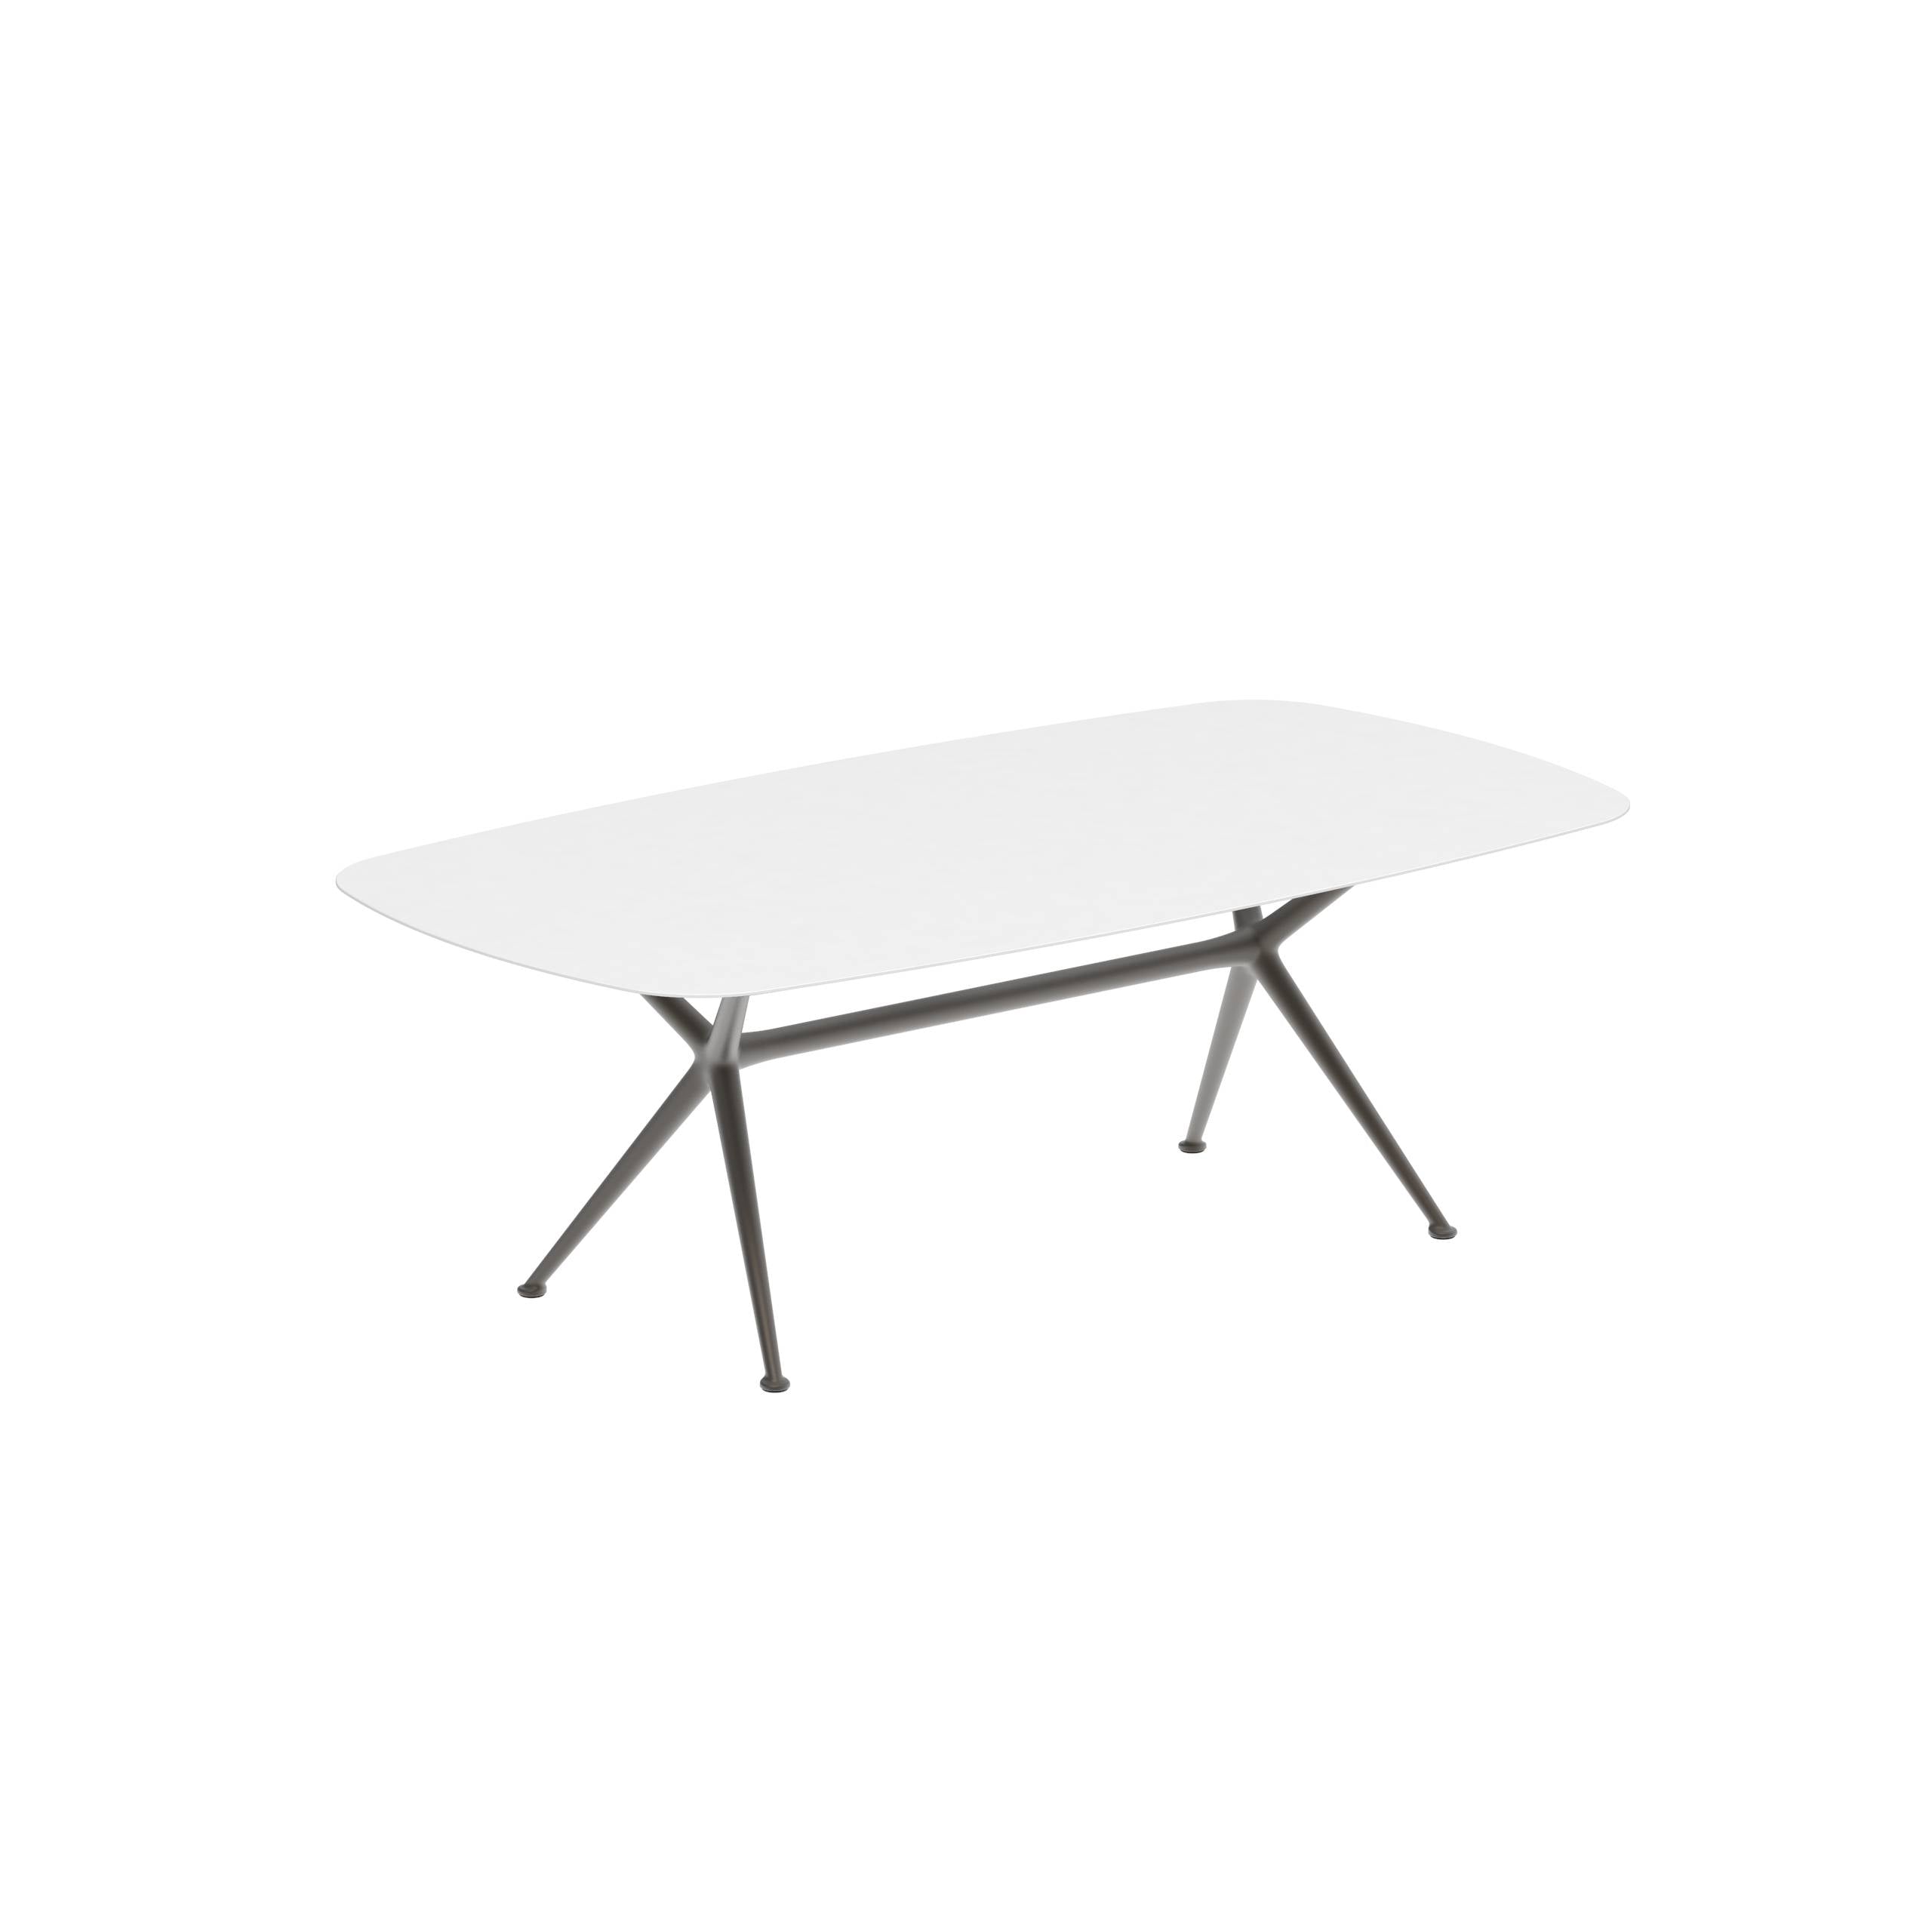 Exes Table 220x120cm Alu Legs Bronze - Table Top Ceramic White